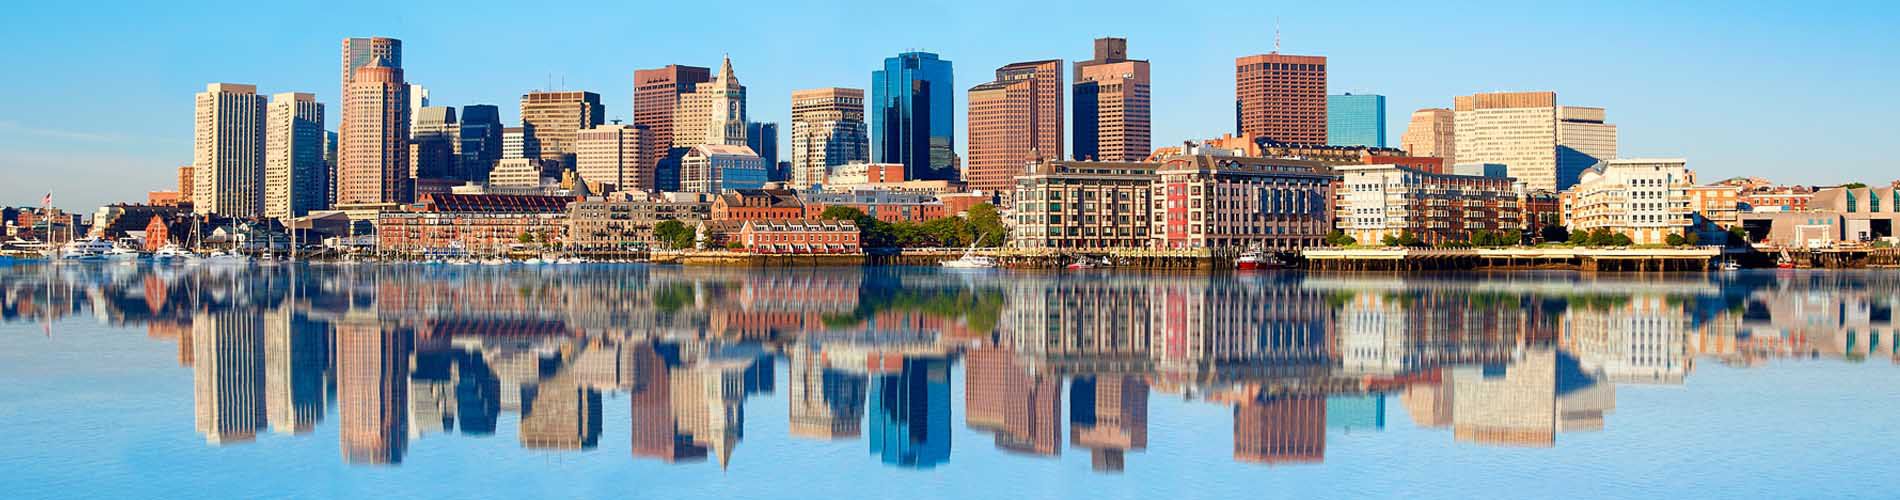 A skyline view of downtown Boston, Massachusetts.